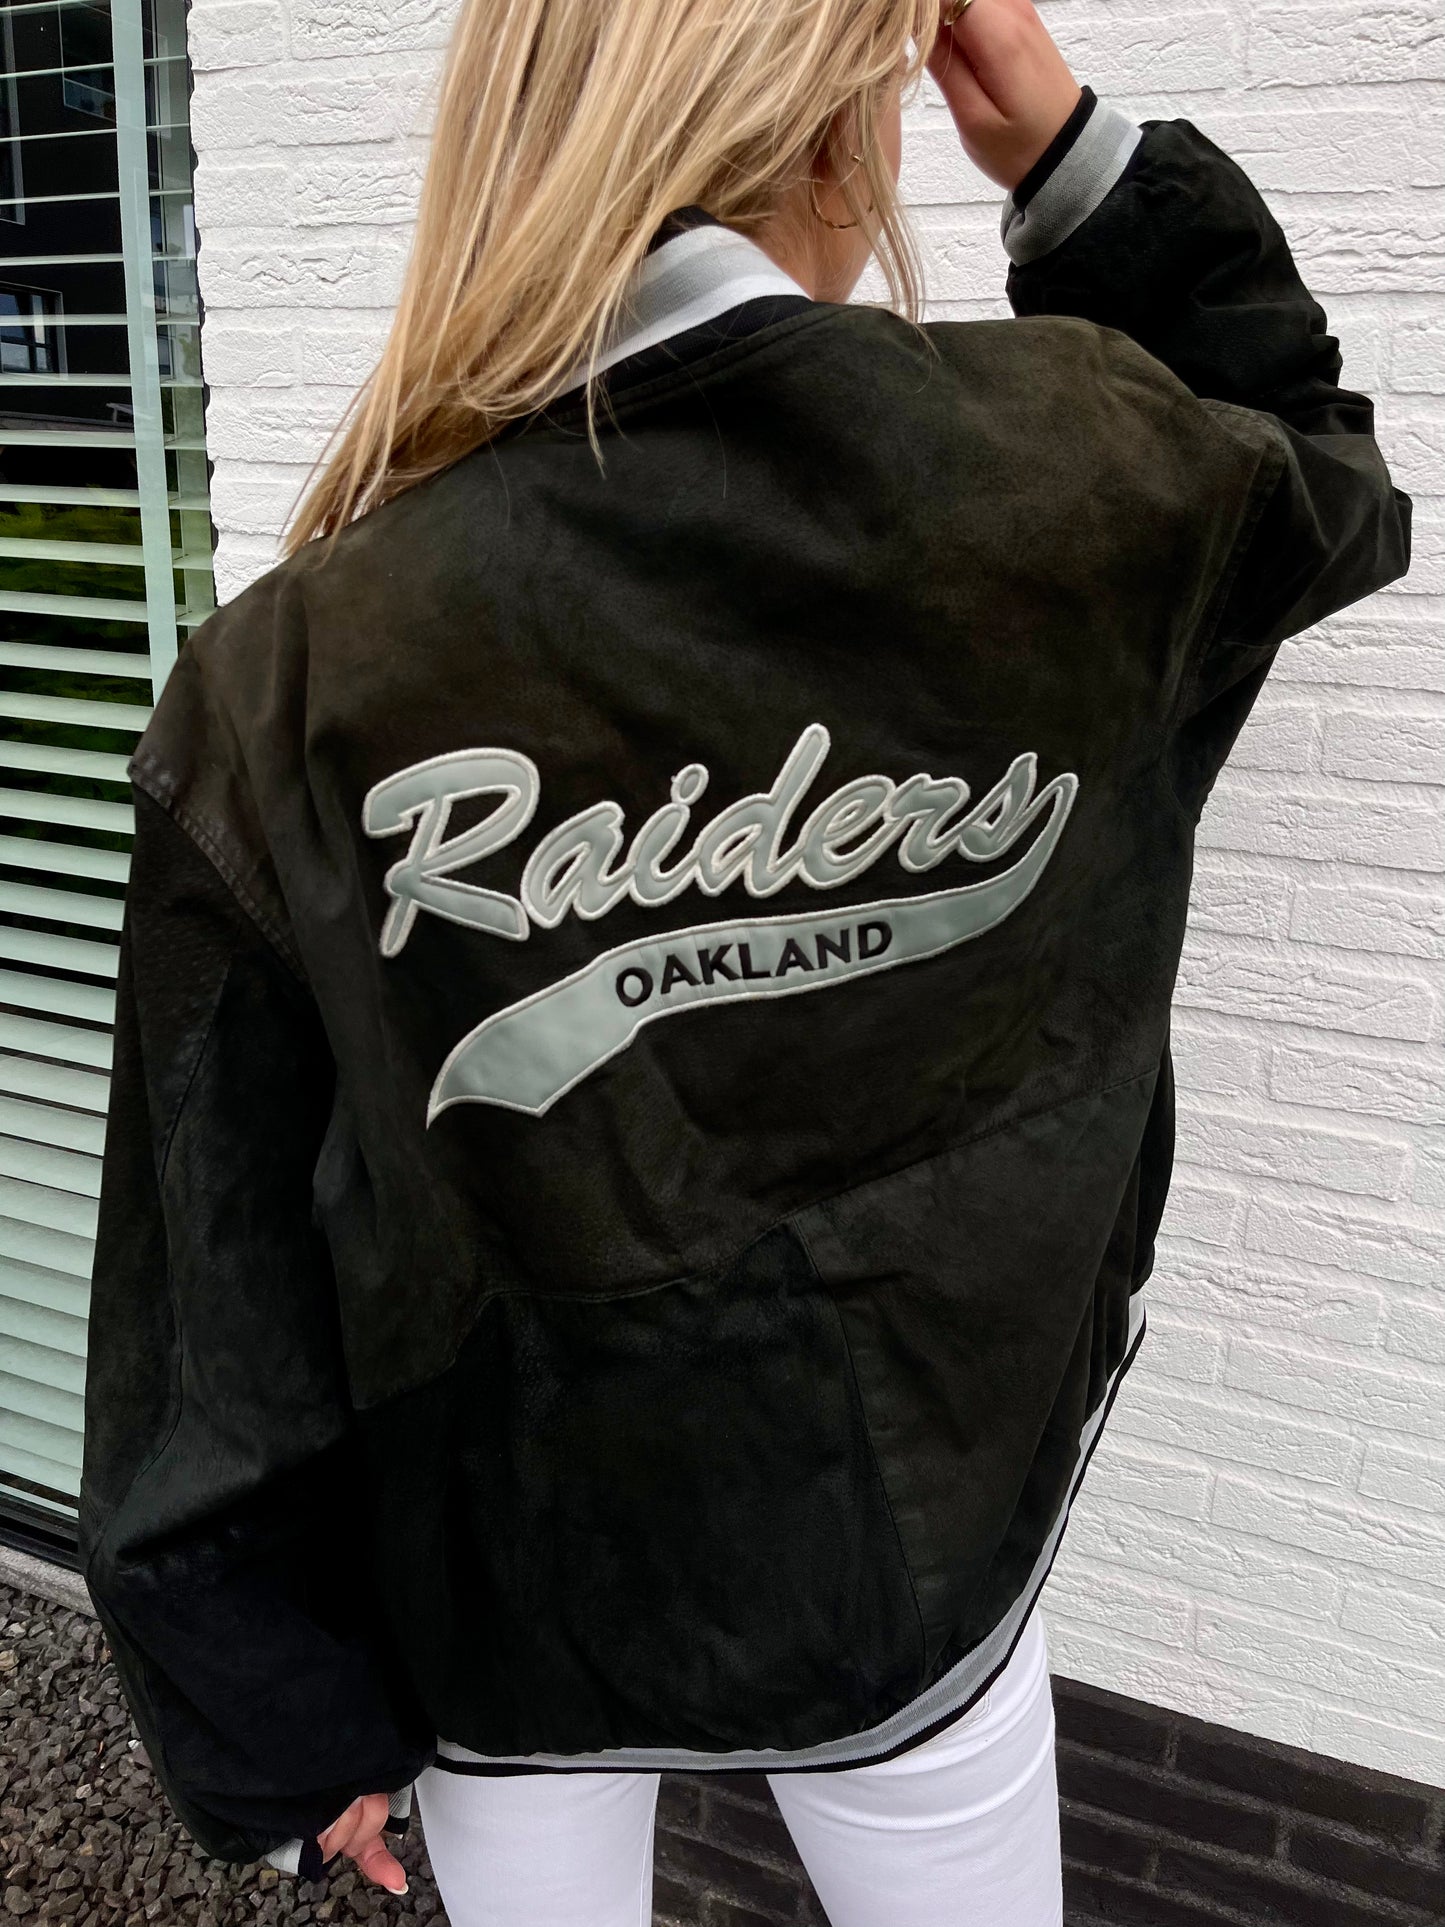 Oakland Raiders leather jacket